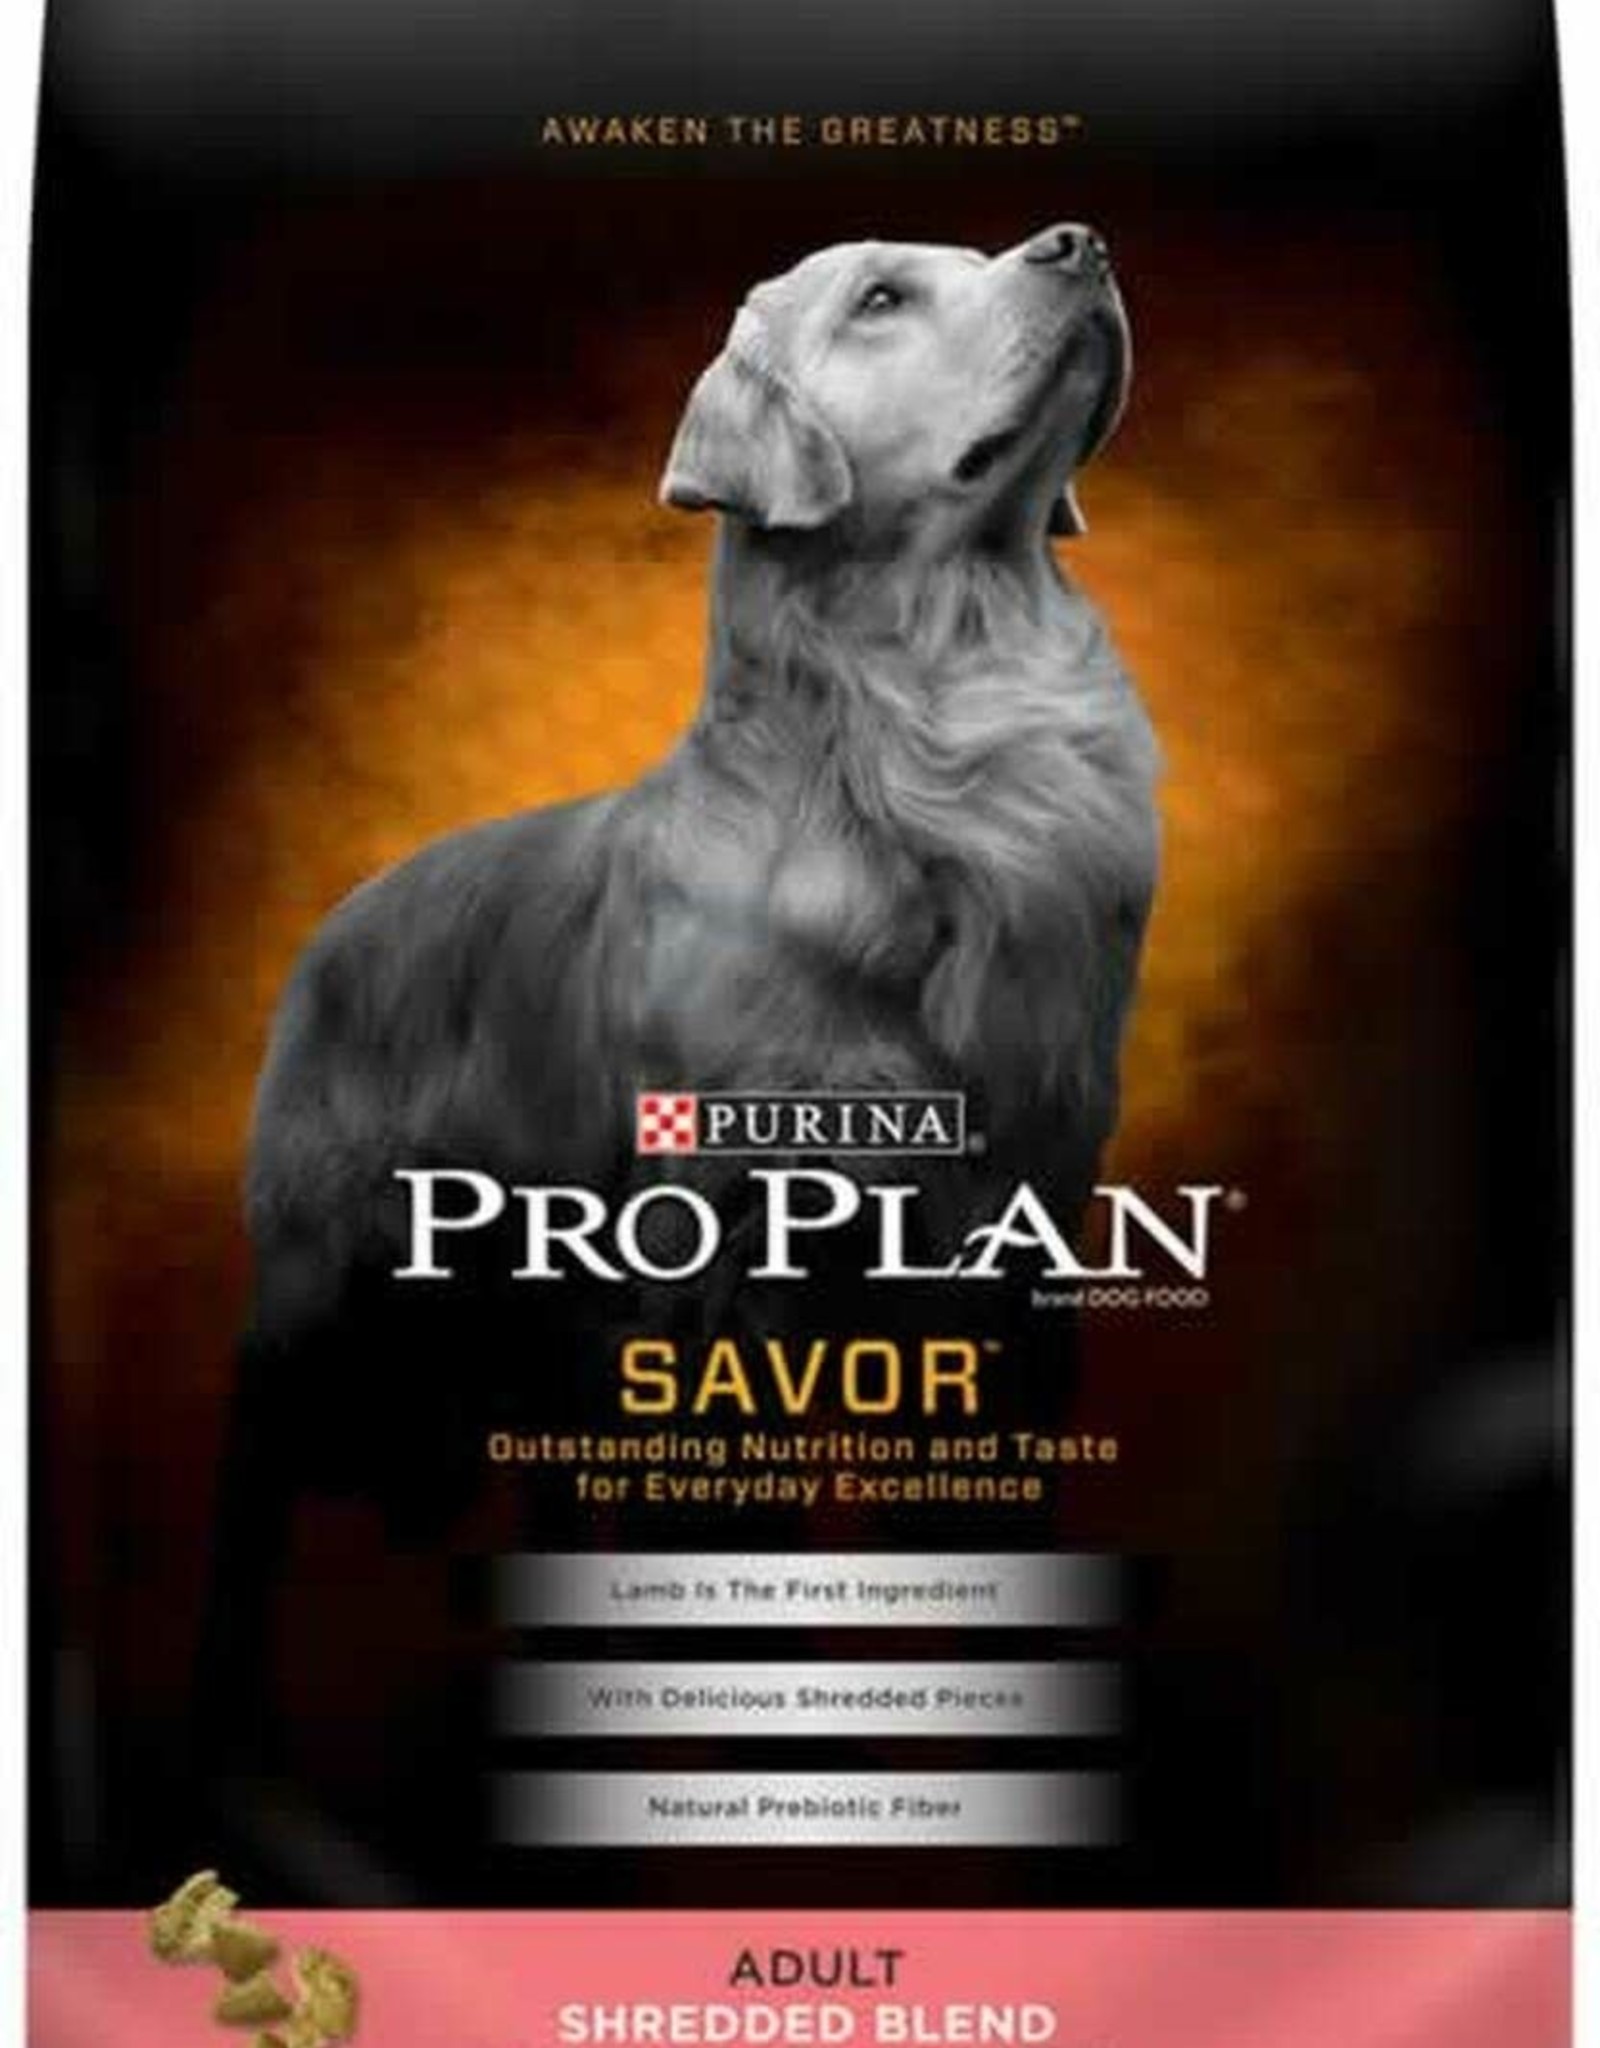 NESTLE PURINA PETCARE COMPANY Pro Plan Shredded Blend Lamb & Rice Dog Food, 35 Lb